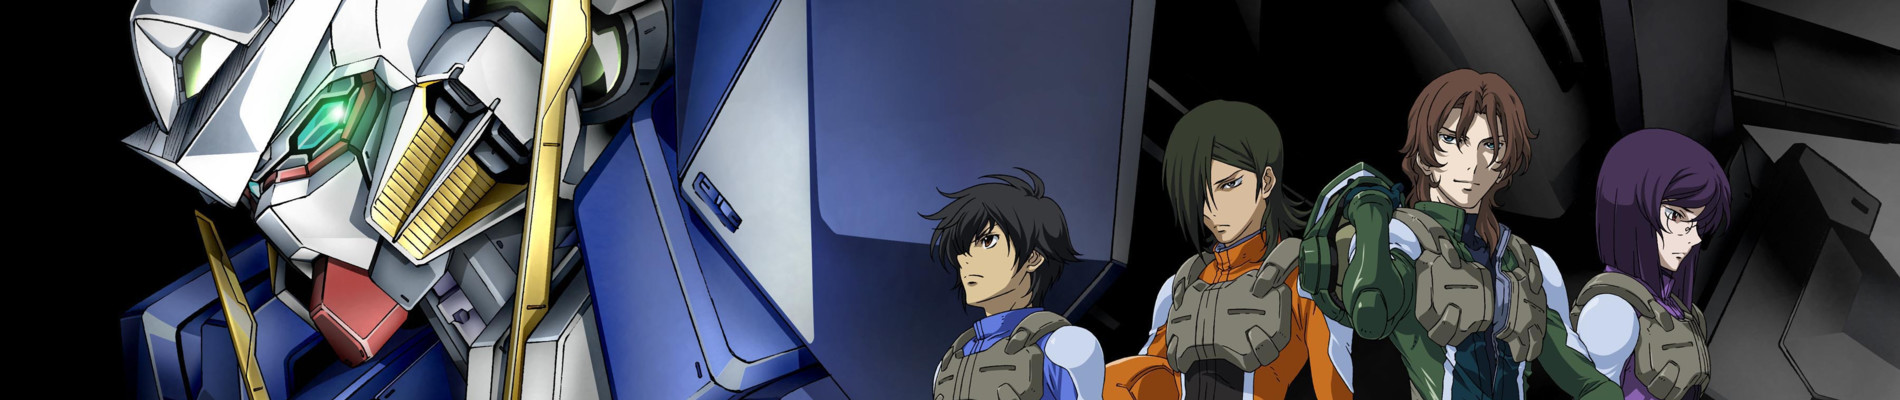 Banner for Mobile Suit Gundam 00